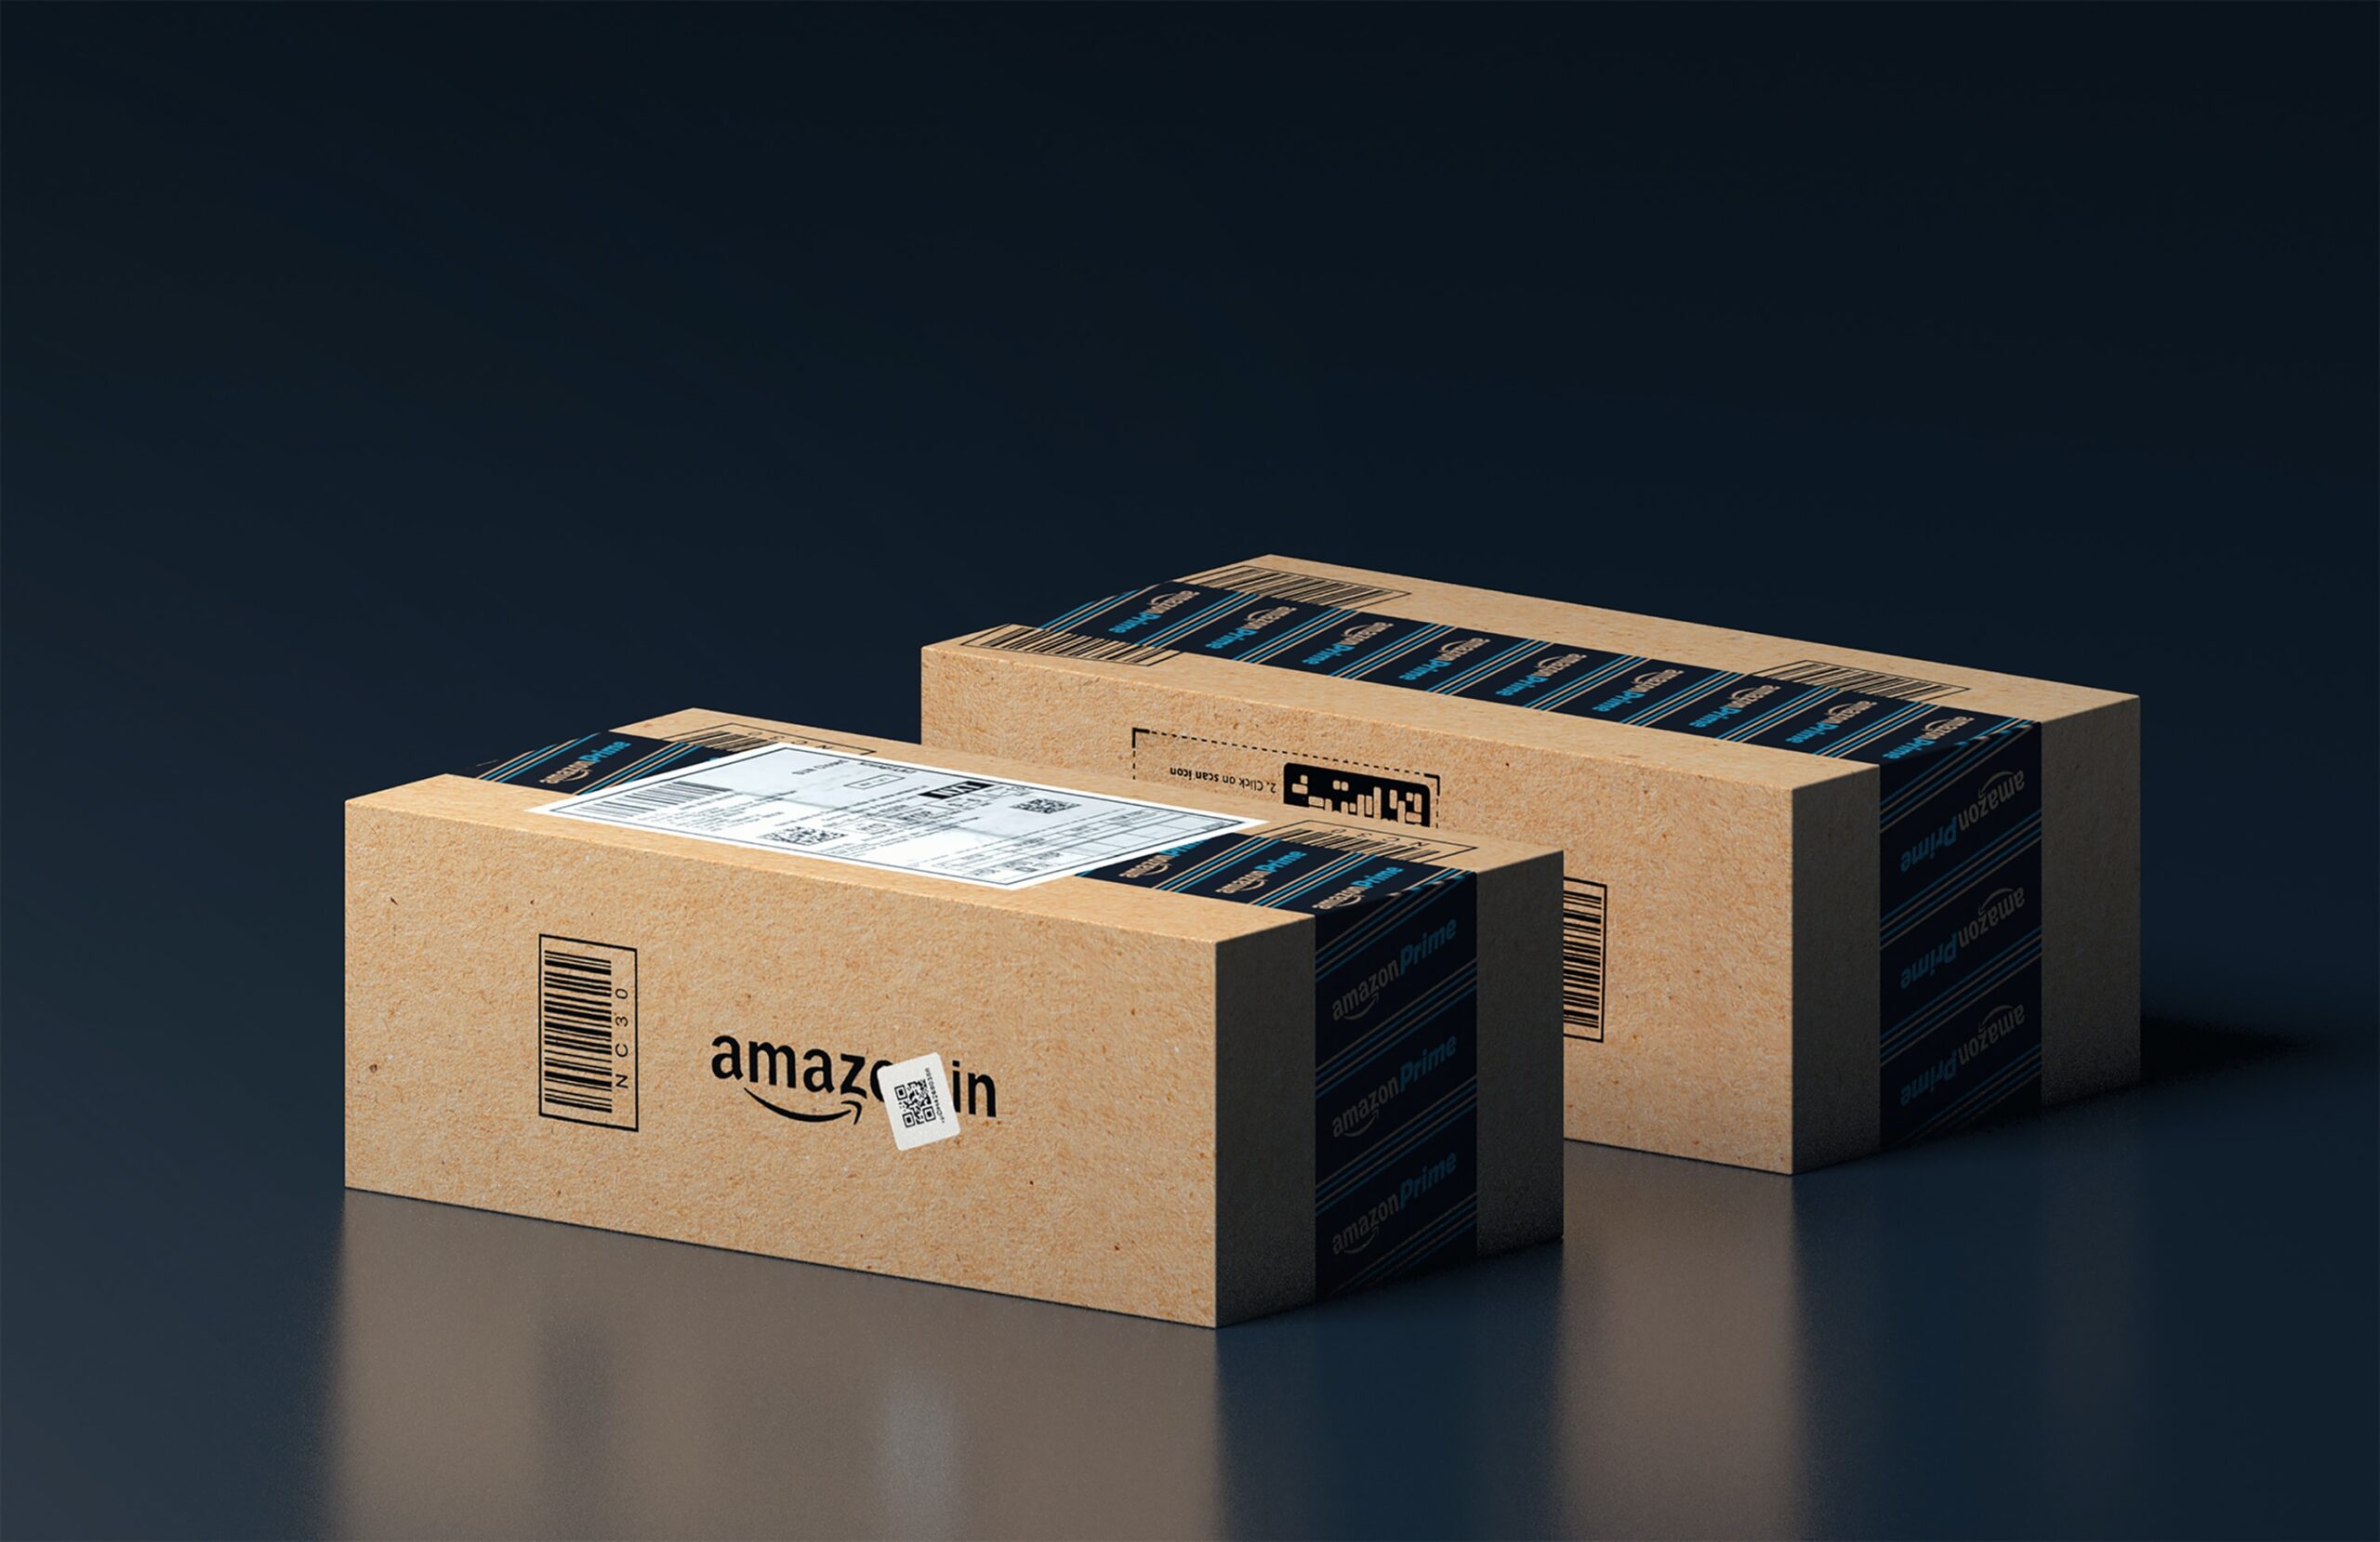 Trademark infringement - the case of Amazon